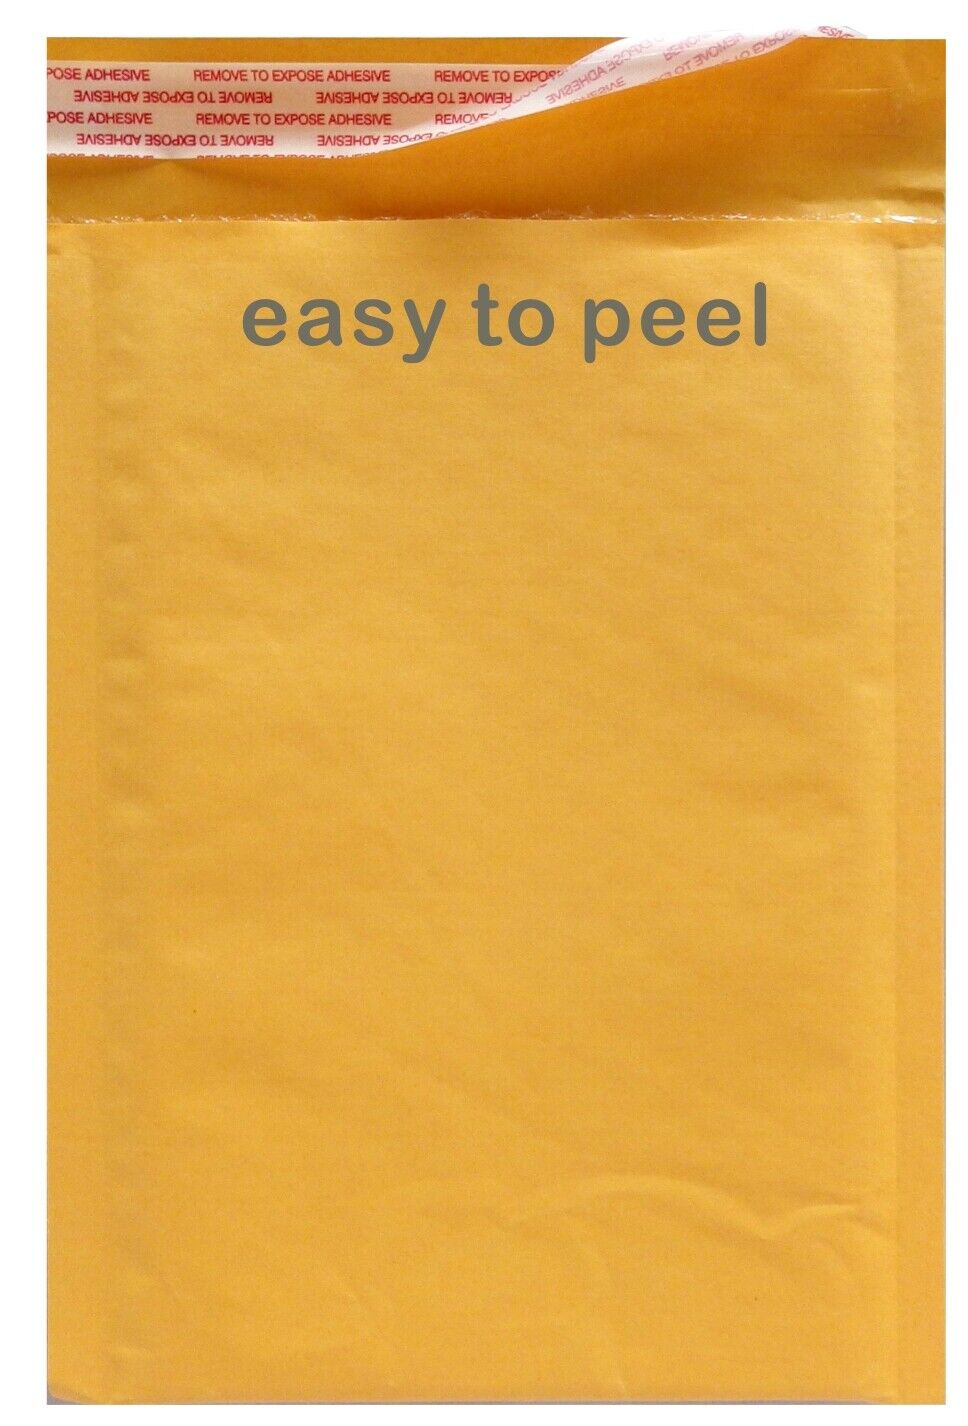 Polycyberusa ® 5000 #000 Kraft Bubble Padded Envelopes Mailers 4 X 7